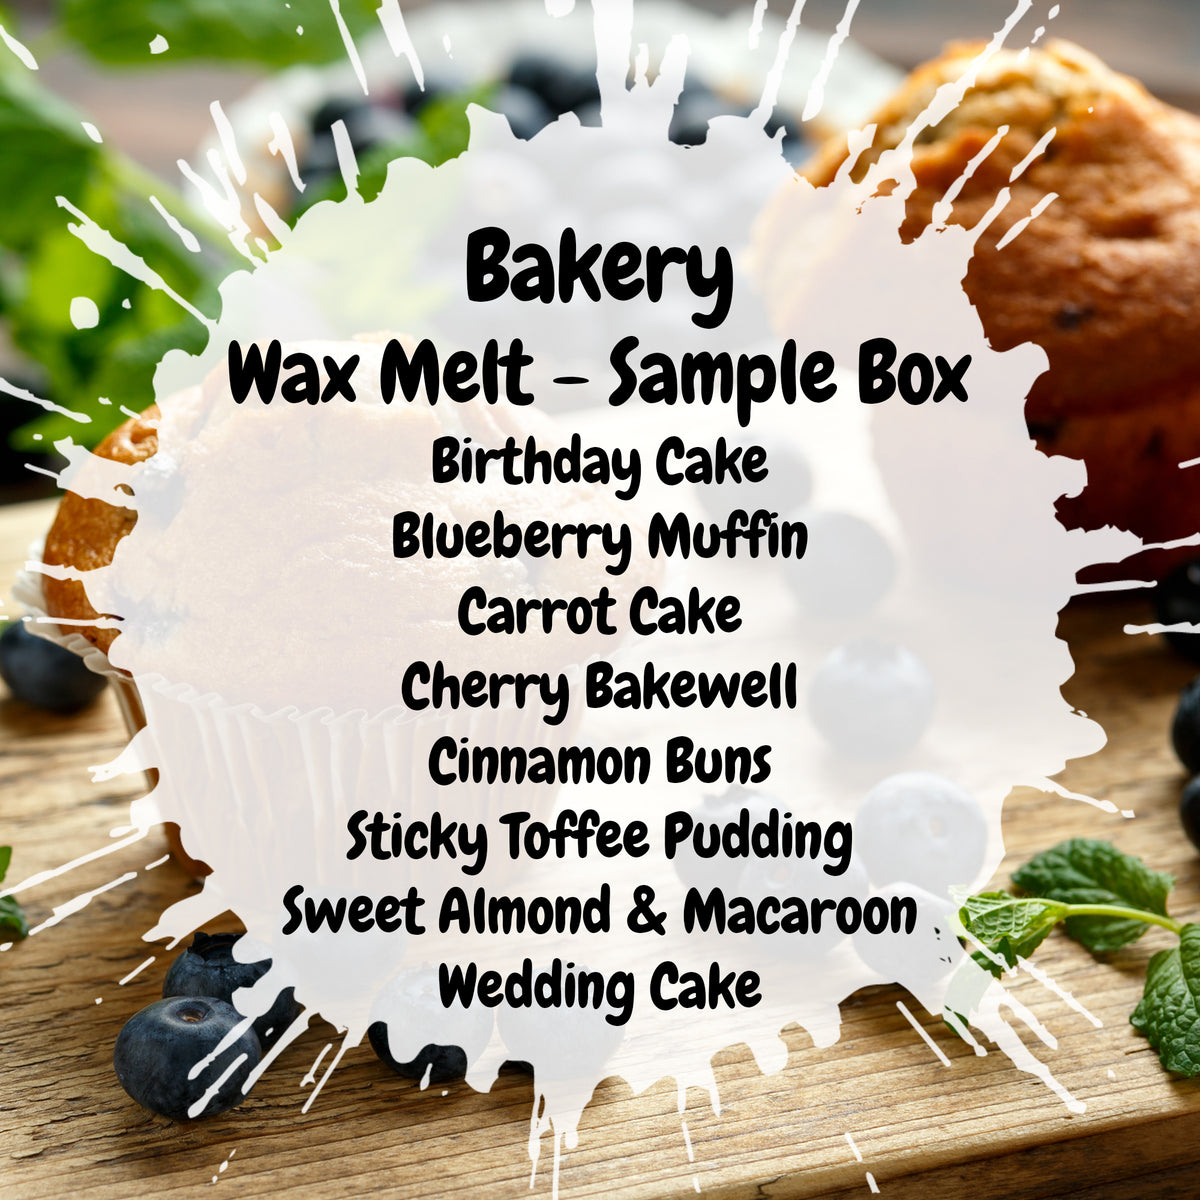 Bakery Wax Melt Sample Box